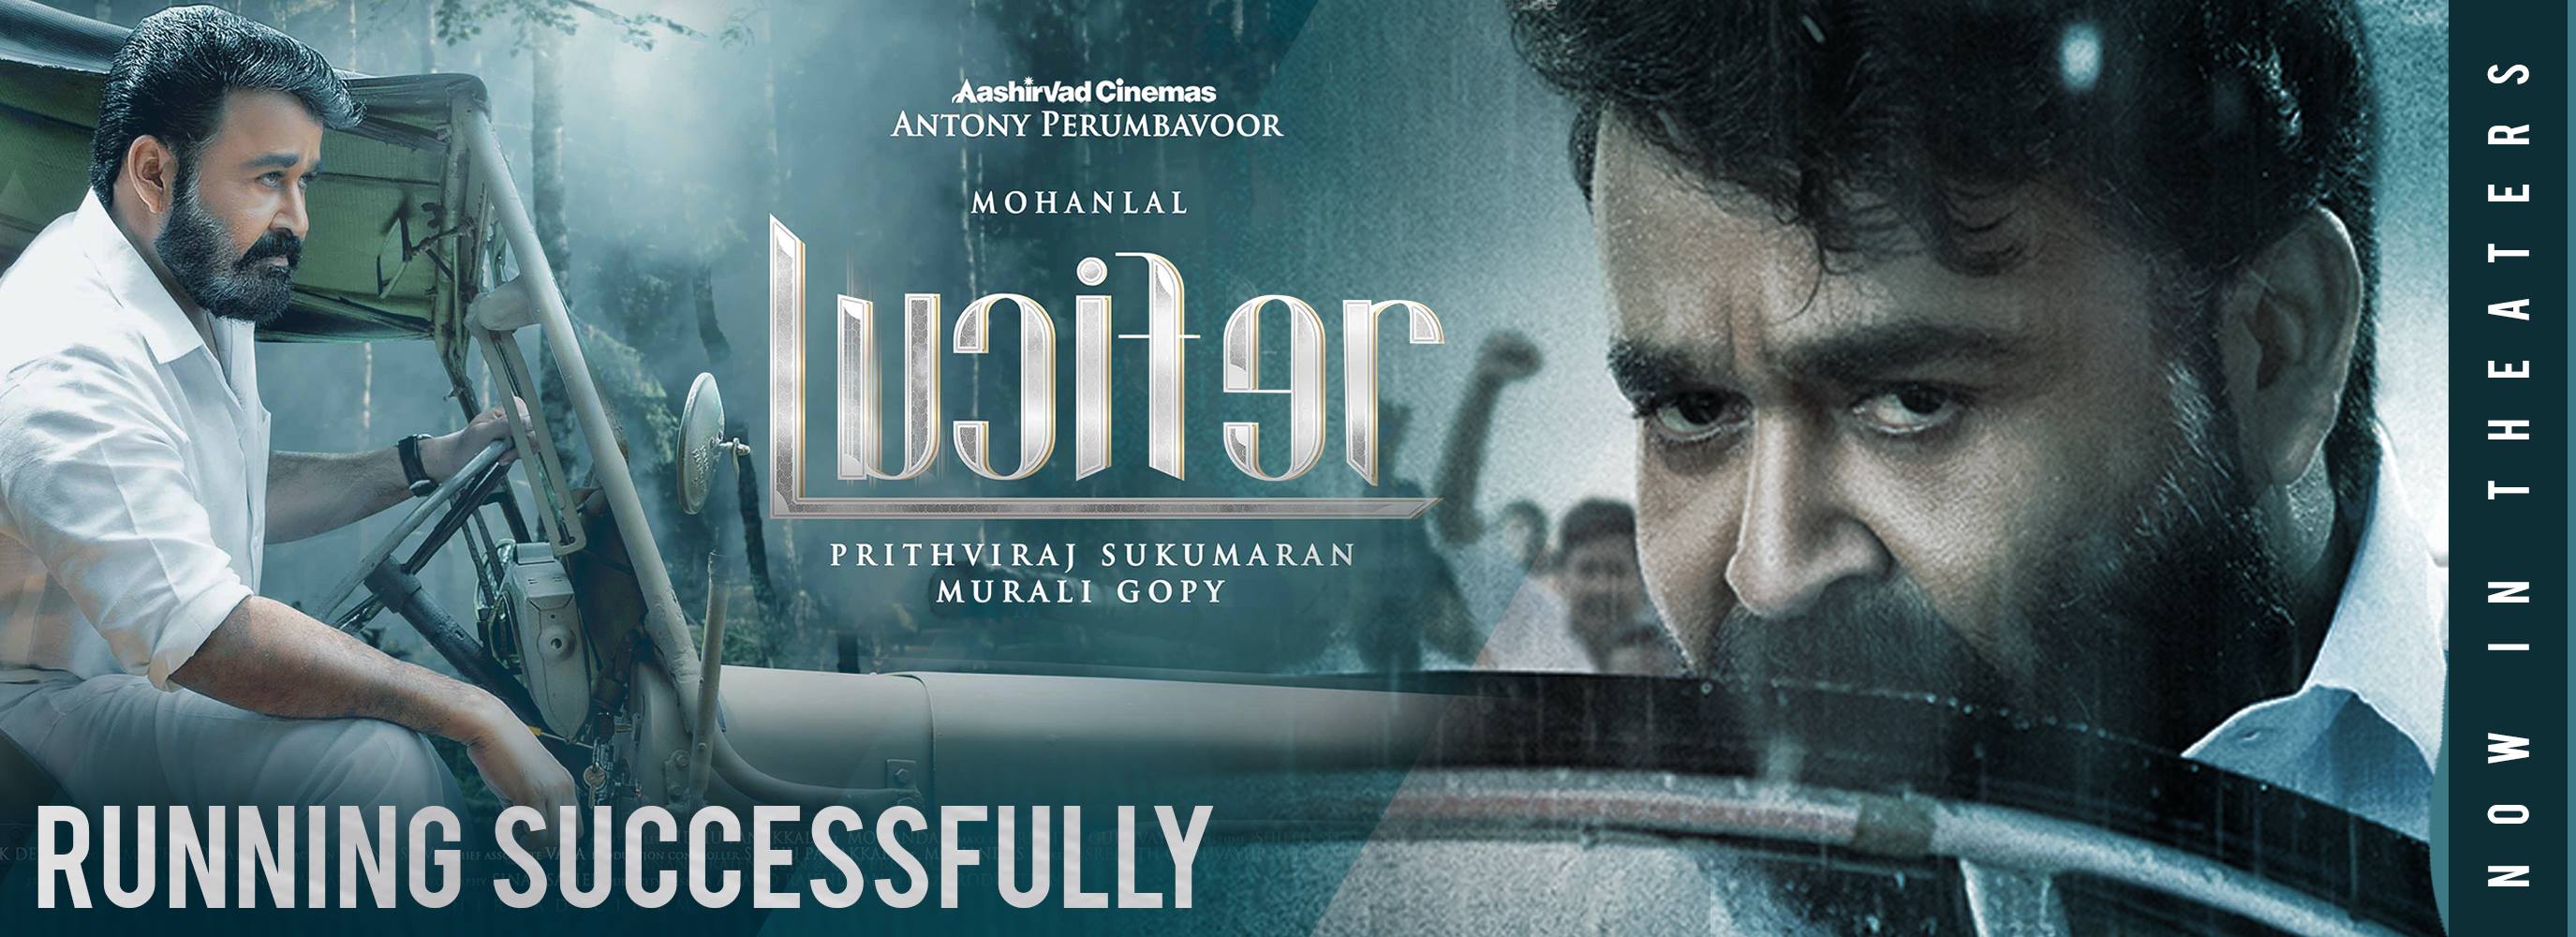 ,lucifer-malayalam-movie-review-veeyen